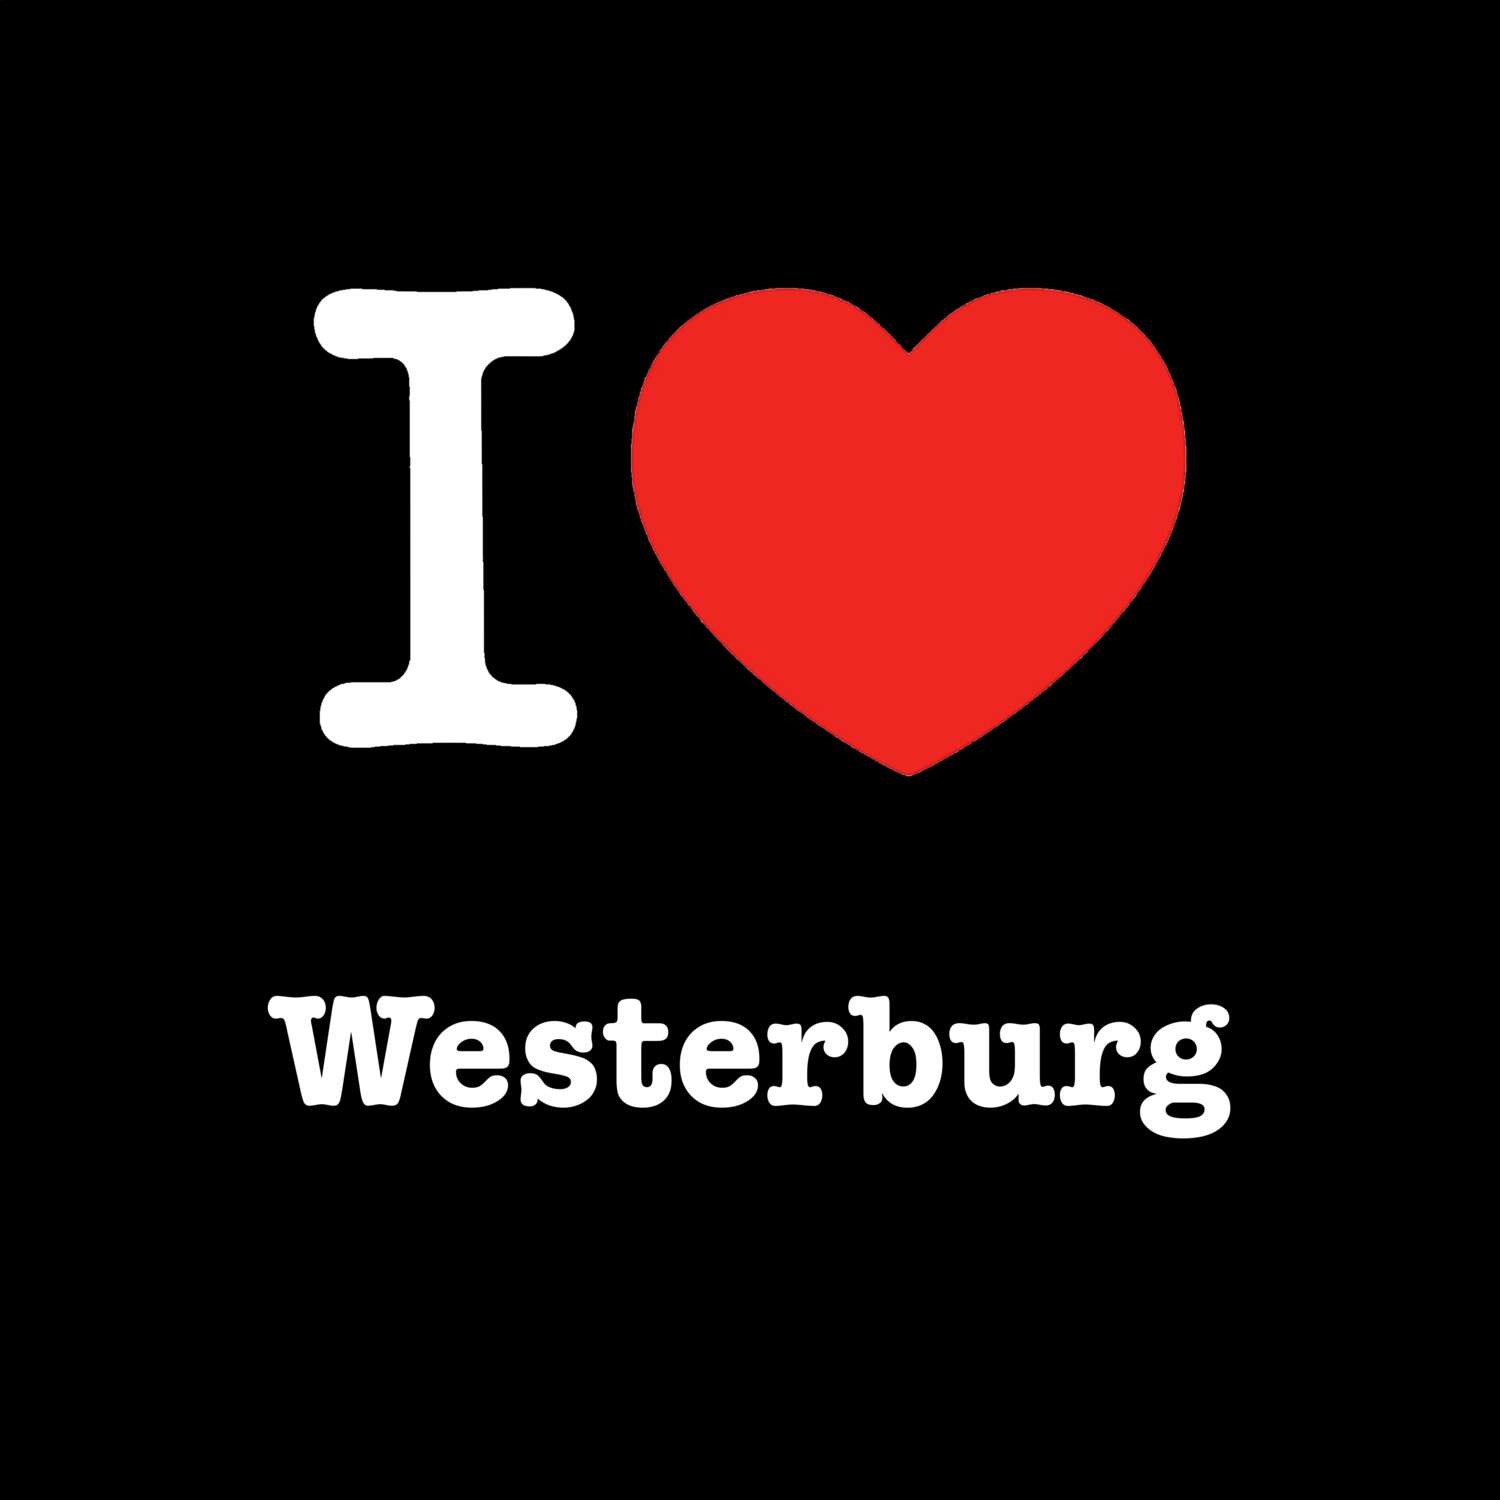 Westerburg T-Shirt »I love«